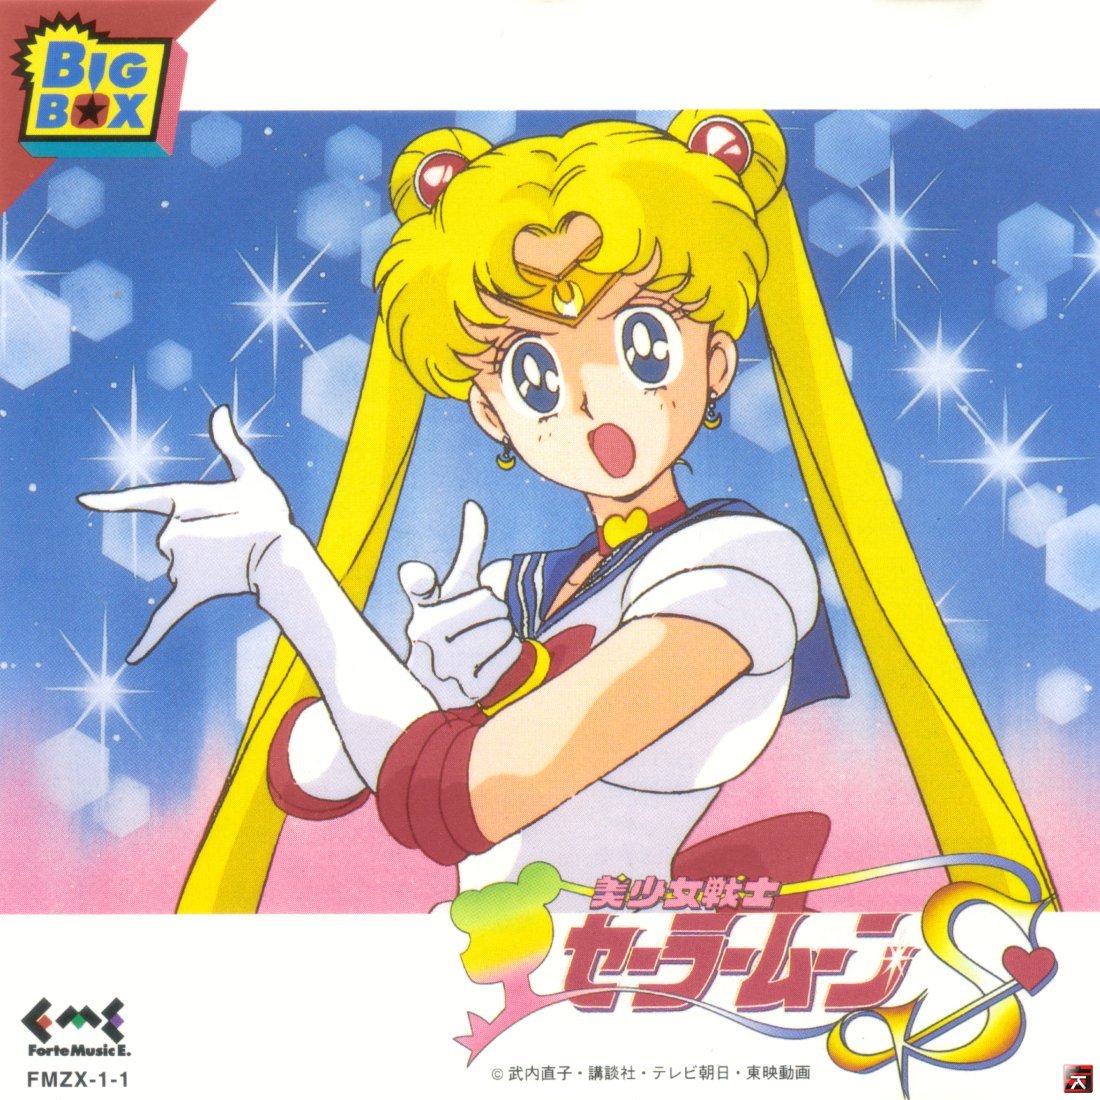 Pretty Soldier Sailor Moon S Big Box | Sailor Moon Wiki | Fandom